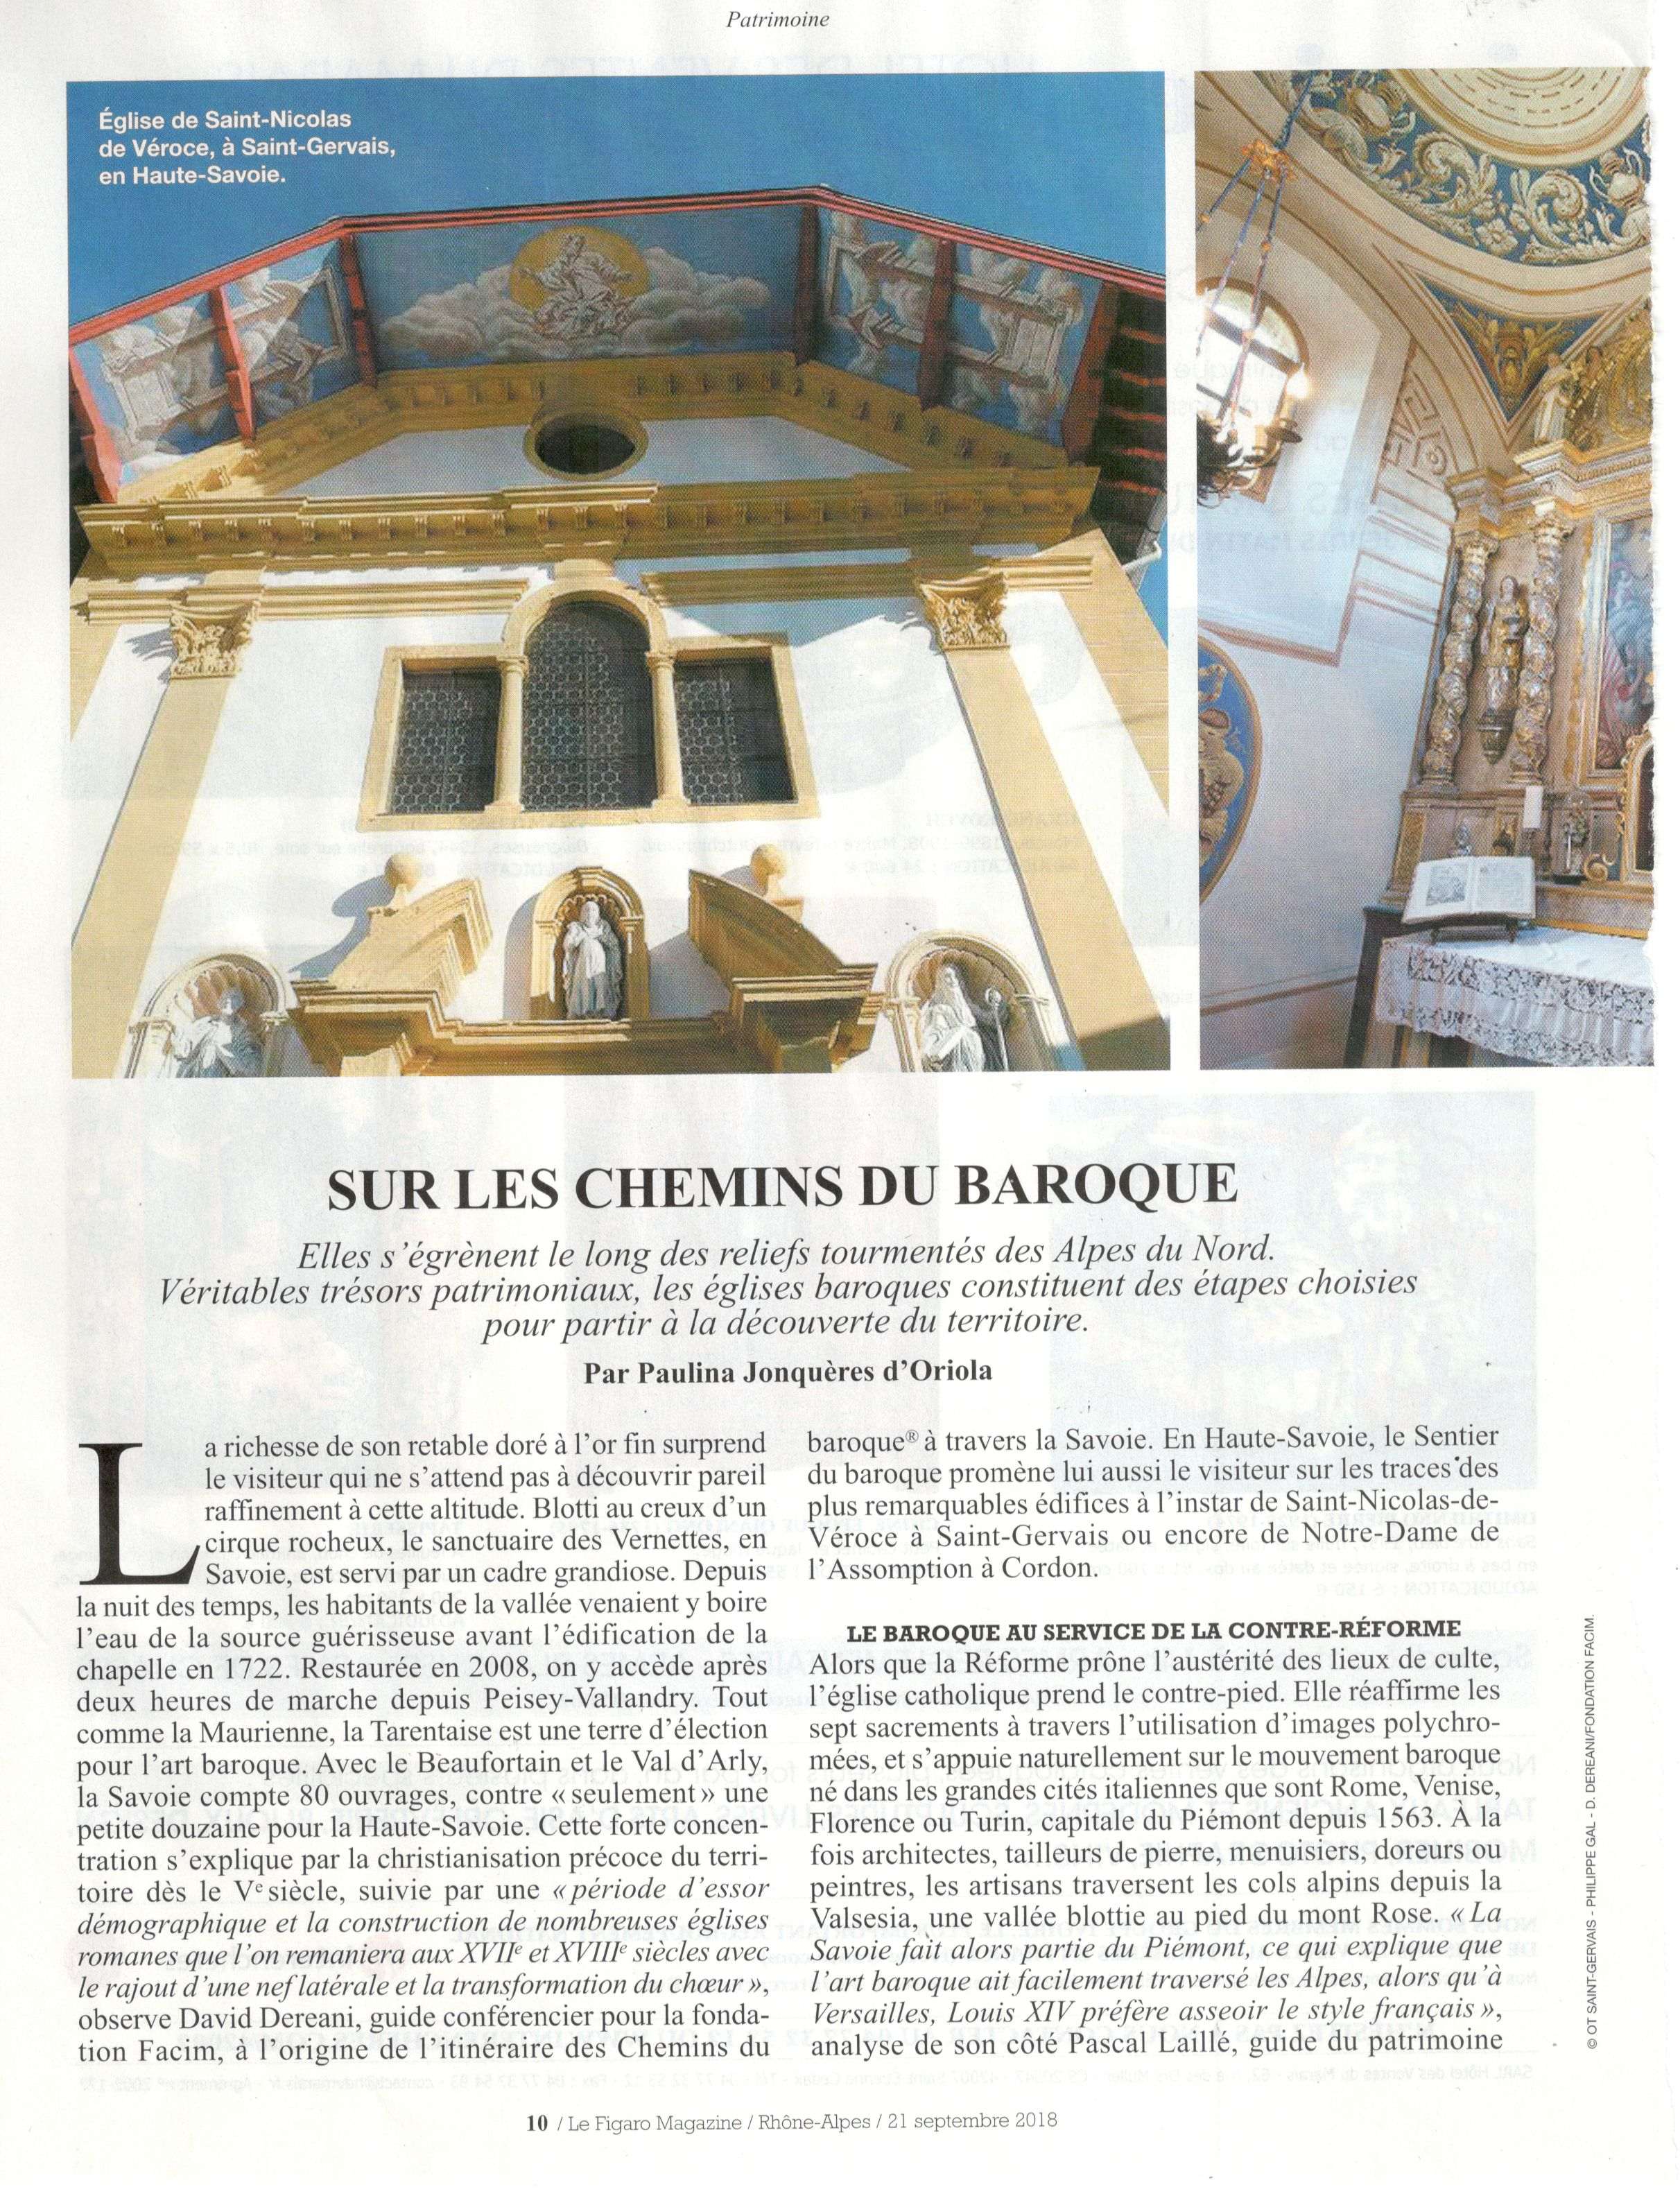 Figaro Magazine 21 sept 18 2